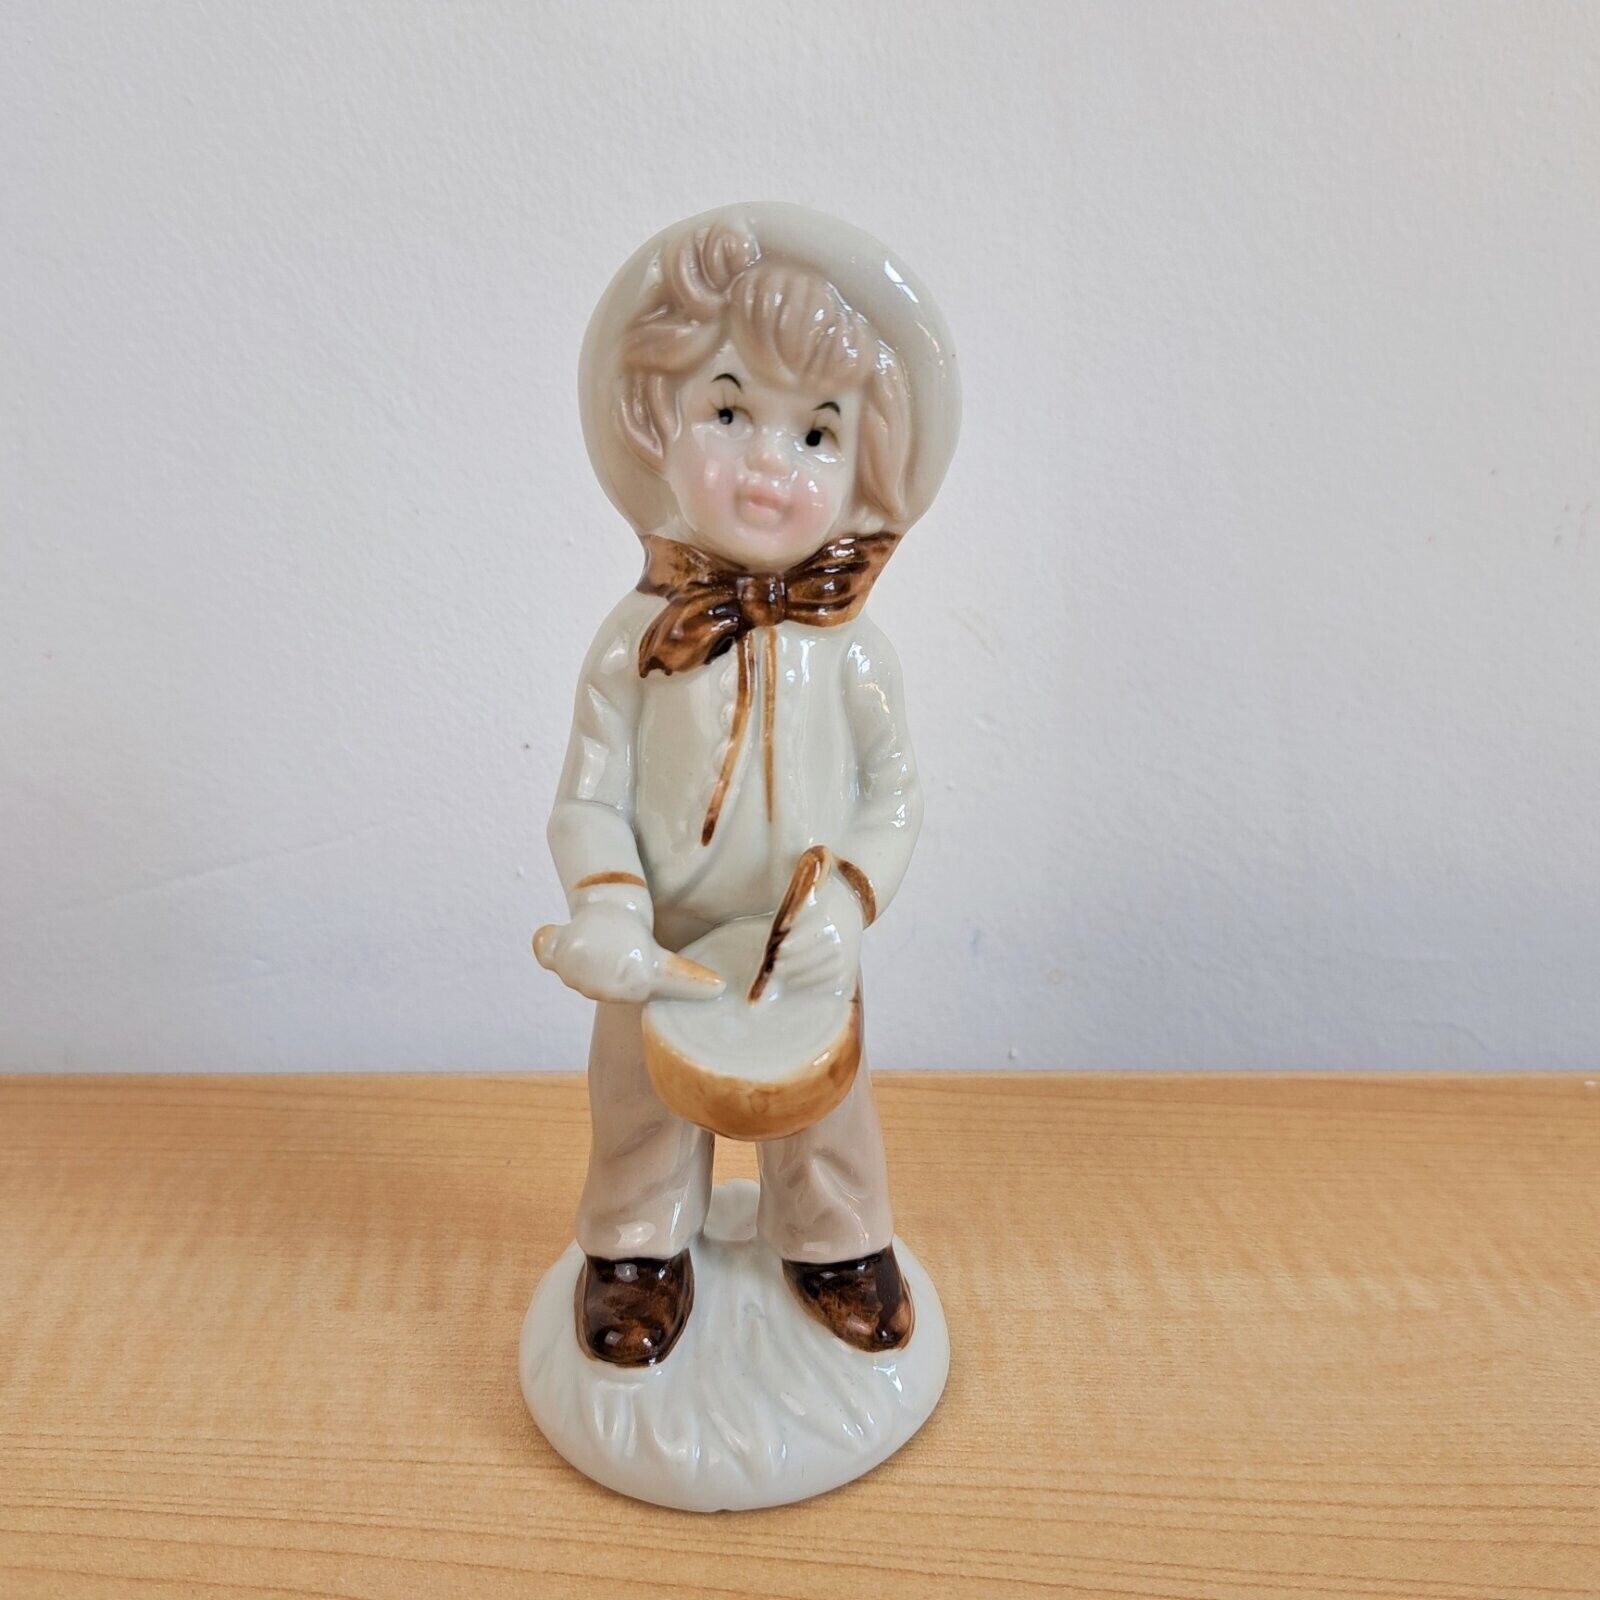 Vintage Porcelain Figurine of Drummer Boy Bavaria Ceramic Music Figurine 1970s